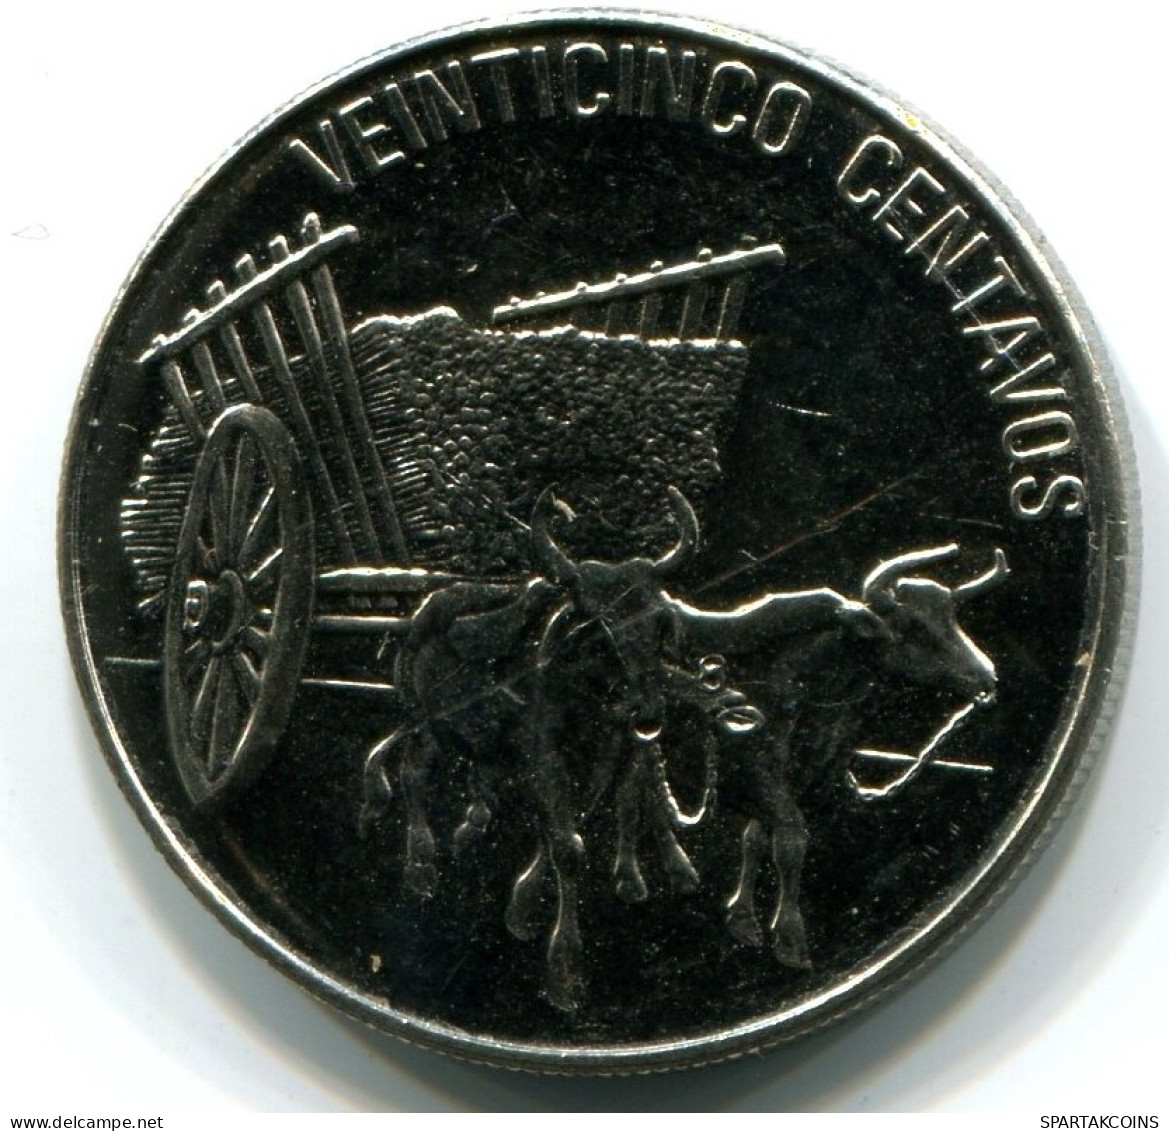 25 CENTAVOS 1991 REPUBLICA DOMINICANA UNC Coin #W11134.U.A - Dominicaanse Republiek